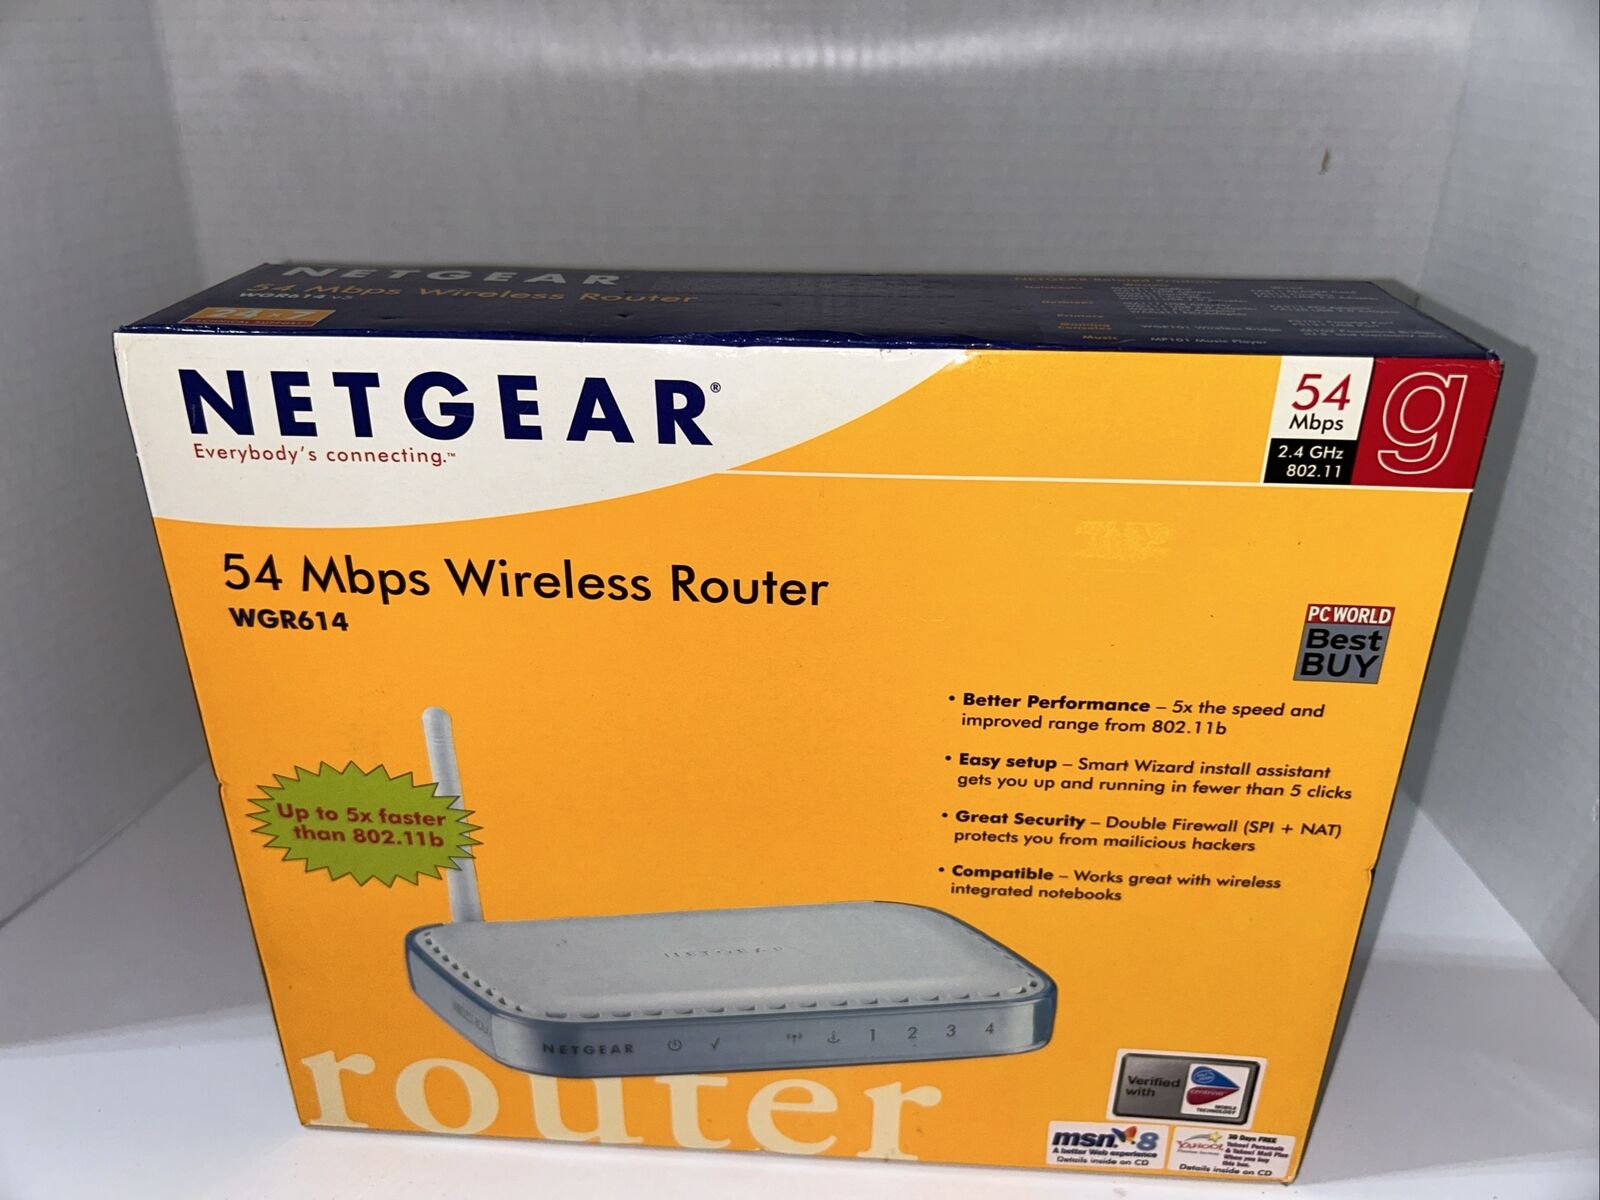 Netgear WGR614 Wireless-G Router New Sealed